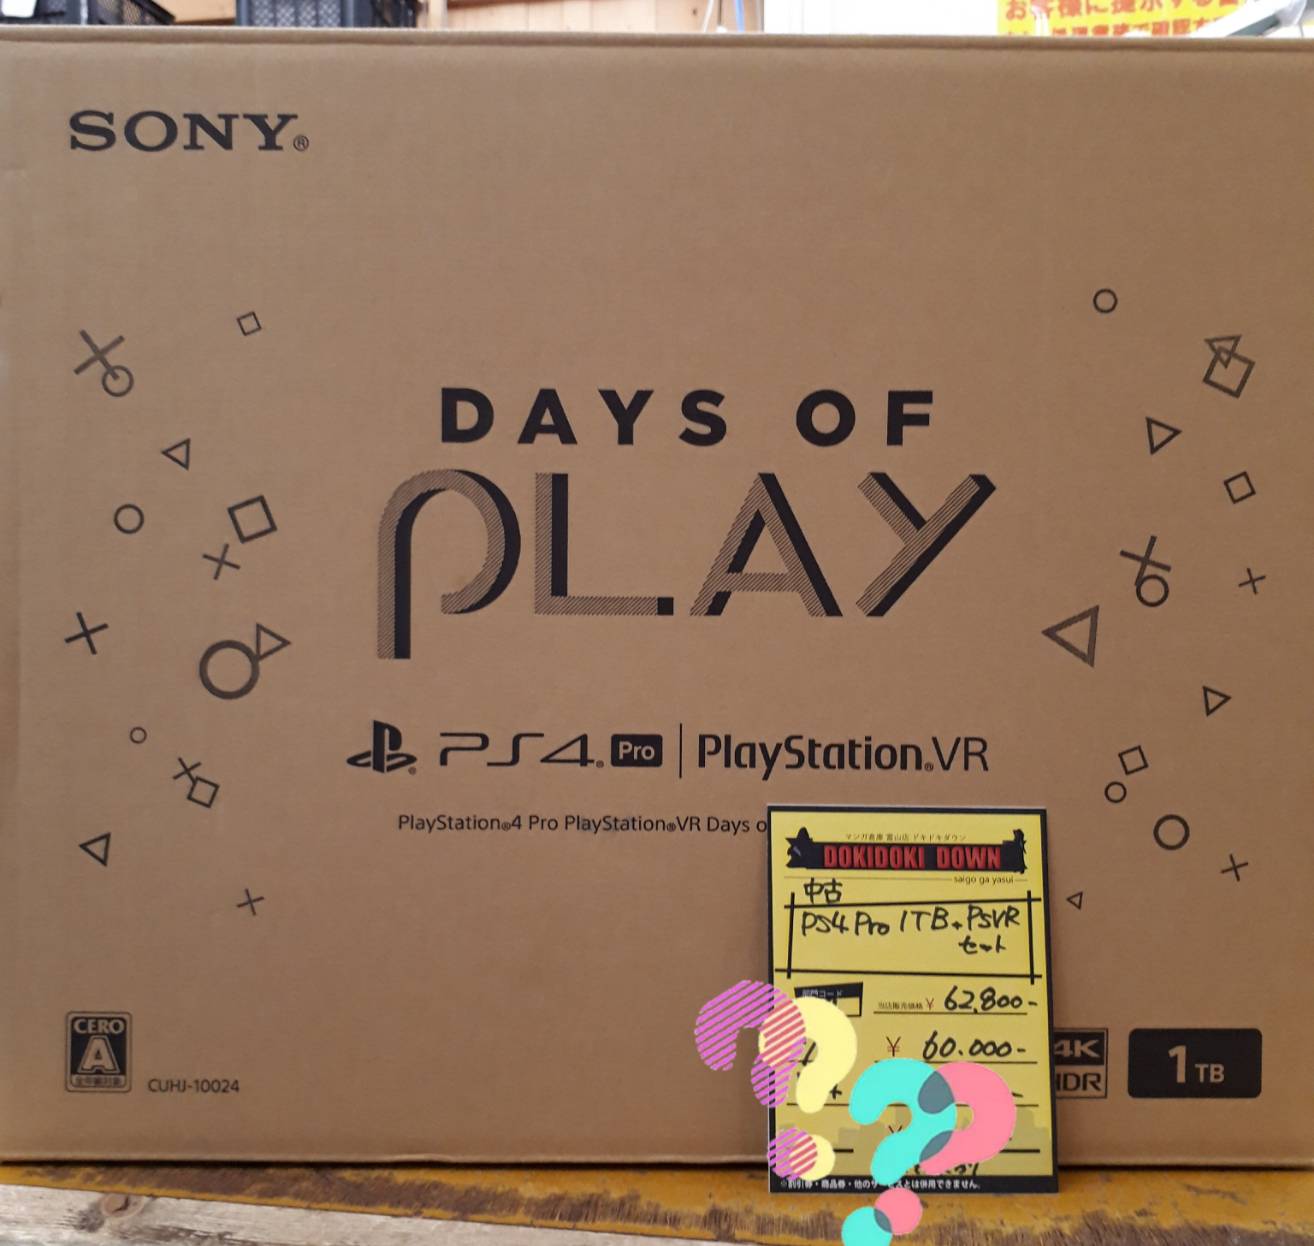 PlayStation4 Pro 1TB ・PlayStation VR ・Days of Play Special Pack とってもお得な